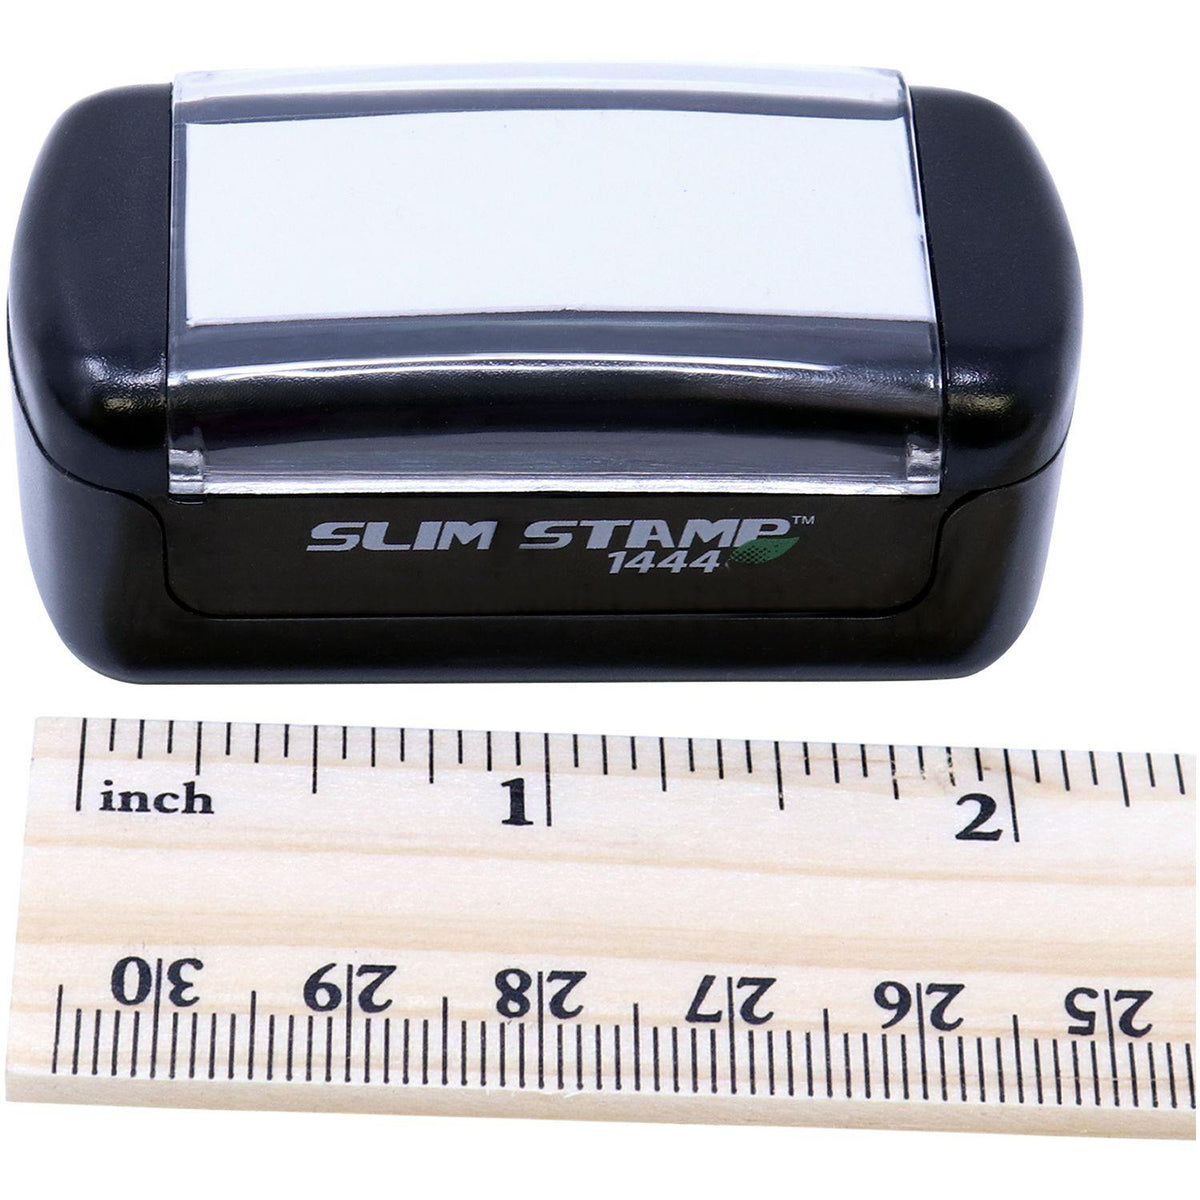 Measurement Slim Pre-Inked Tripilicado Stamp with Ruler